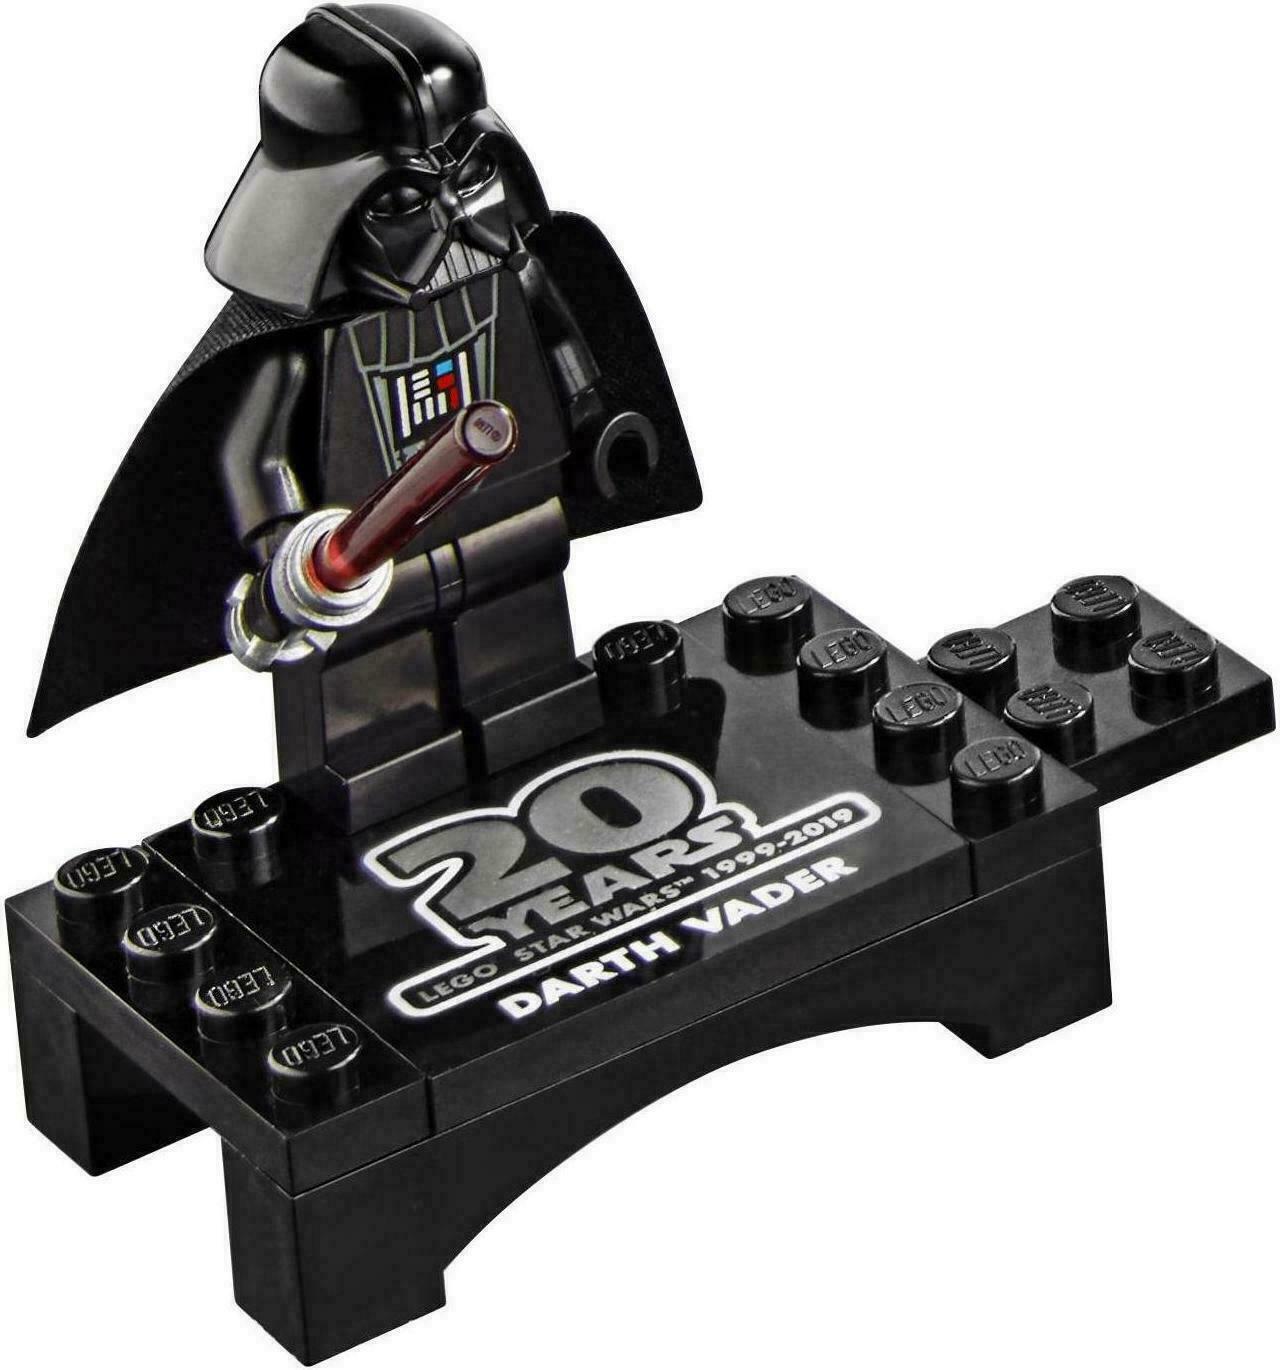 Darth Vader w/ Stand - LEGO Star Wars 